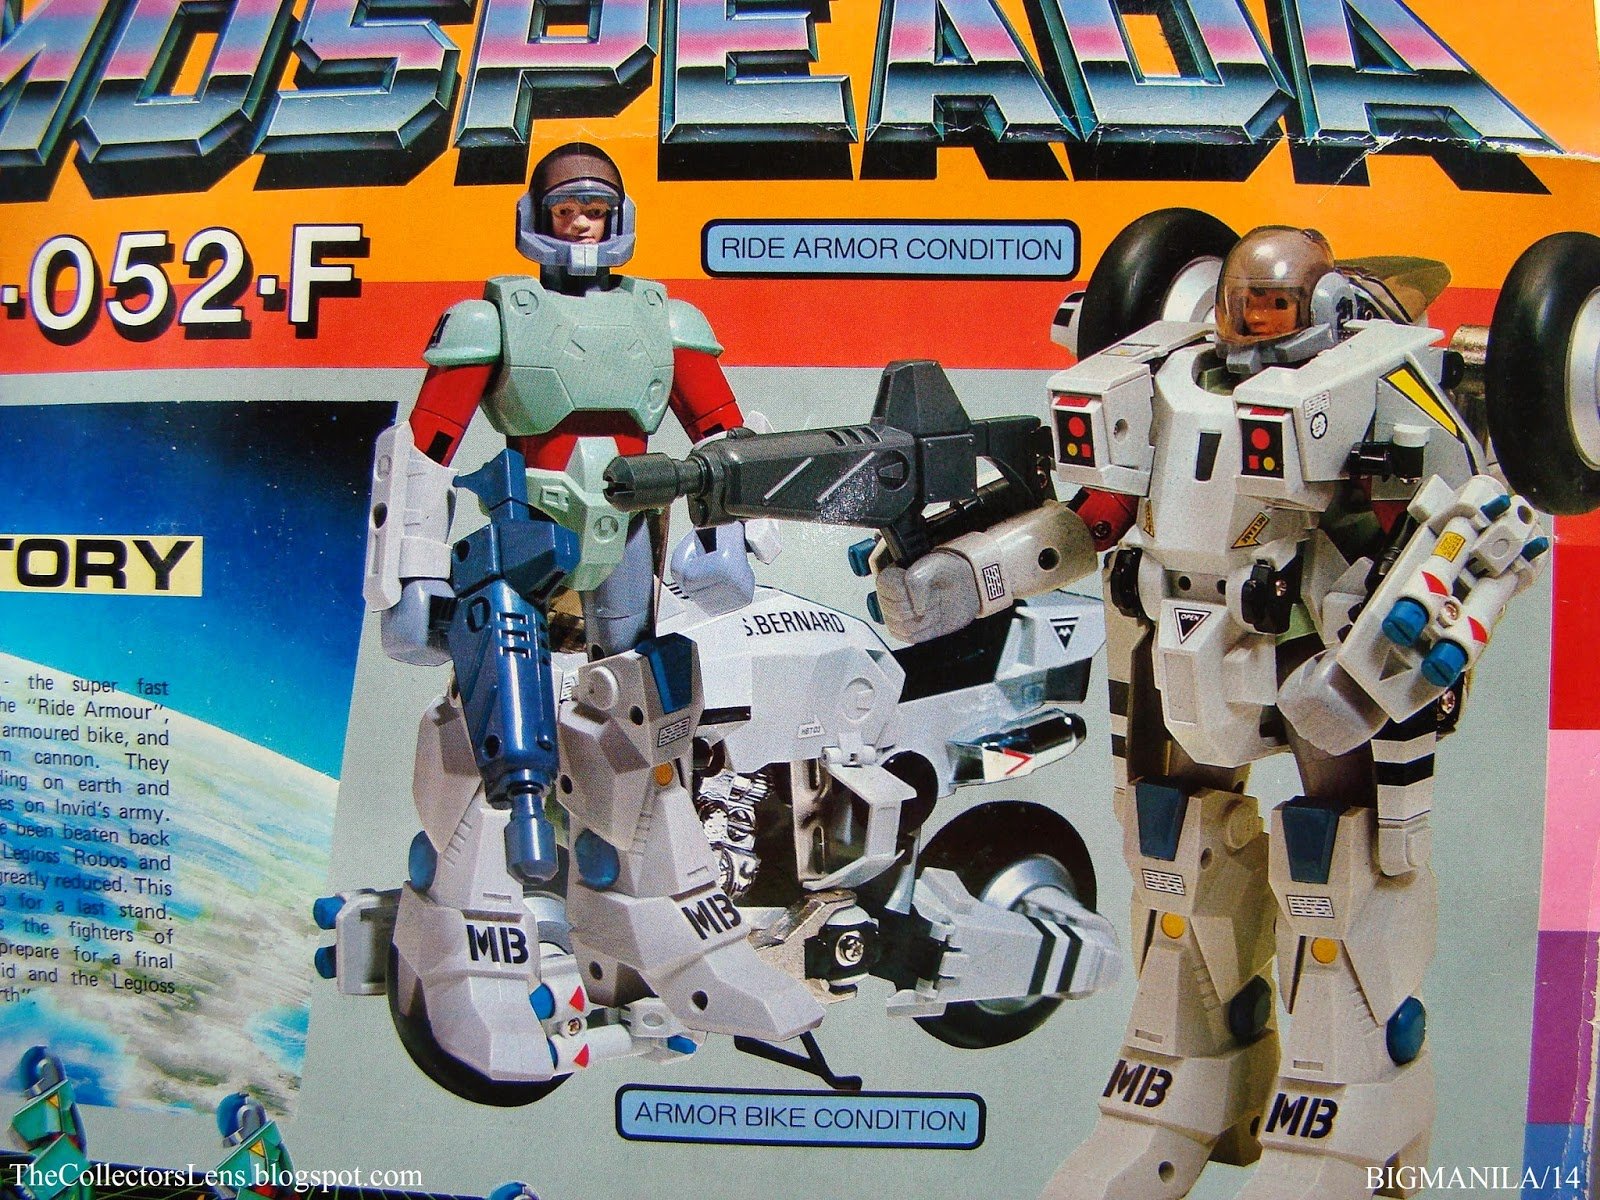 The Henshin Robo Mospeada 21 VR-052-F Scott Bernard Armor Bike / Riding Suit 1983 Vintage Figure Set (Robotech New Generation Cyclone Motorcycle and Rider) Robotech